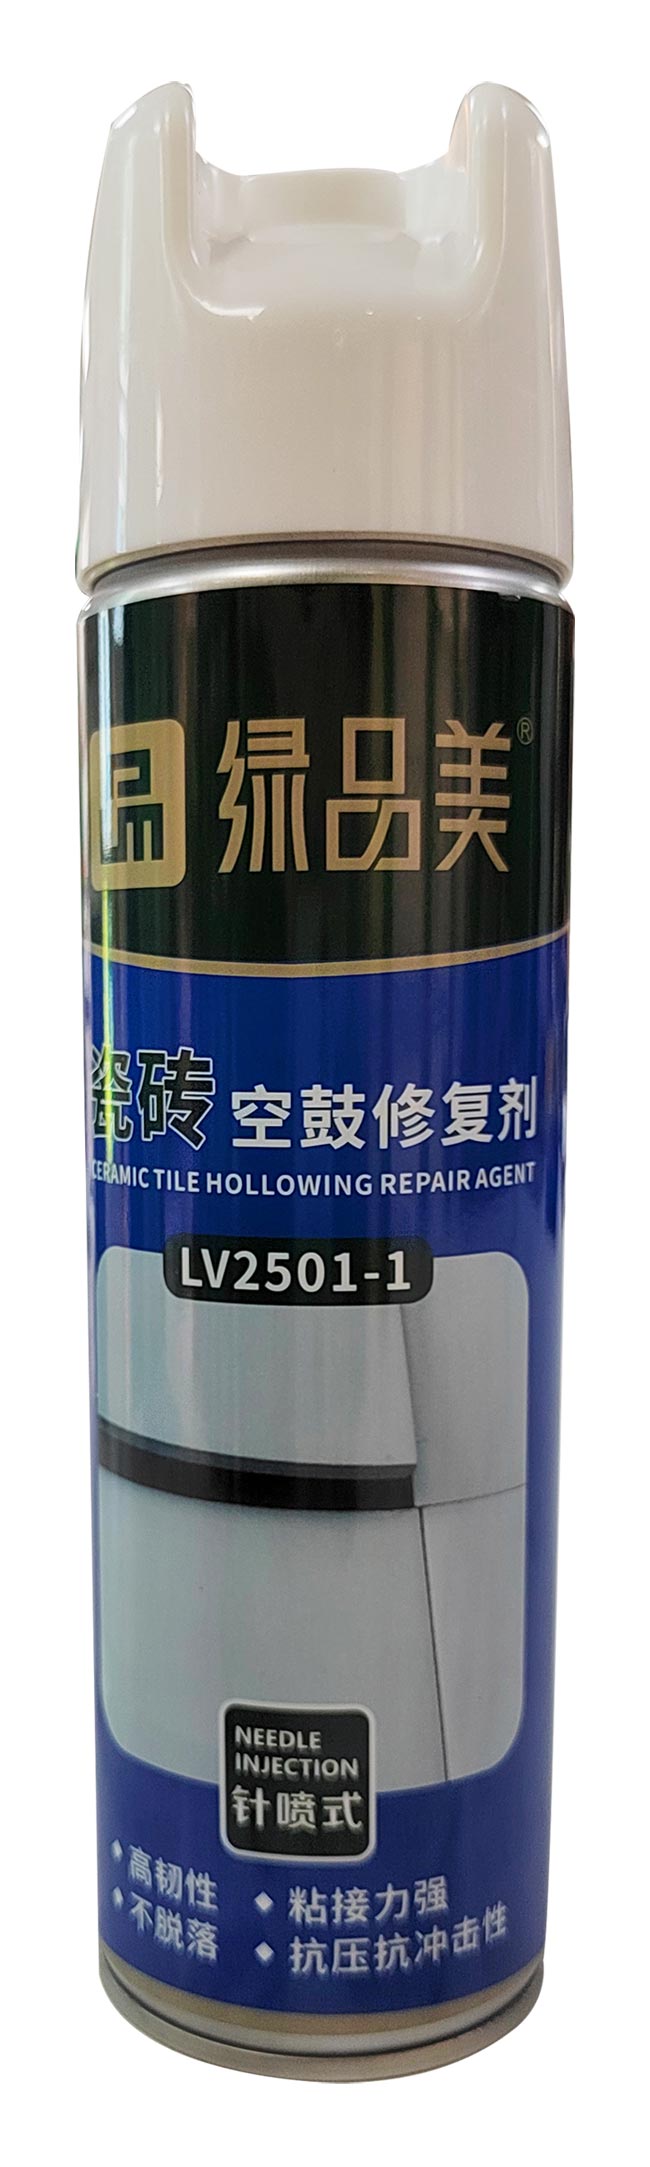 LV2501-1-瓷磚空鼓修復劑